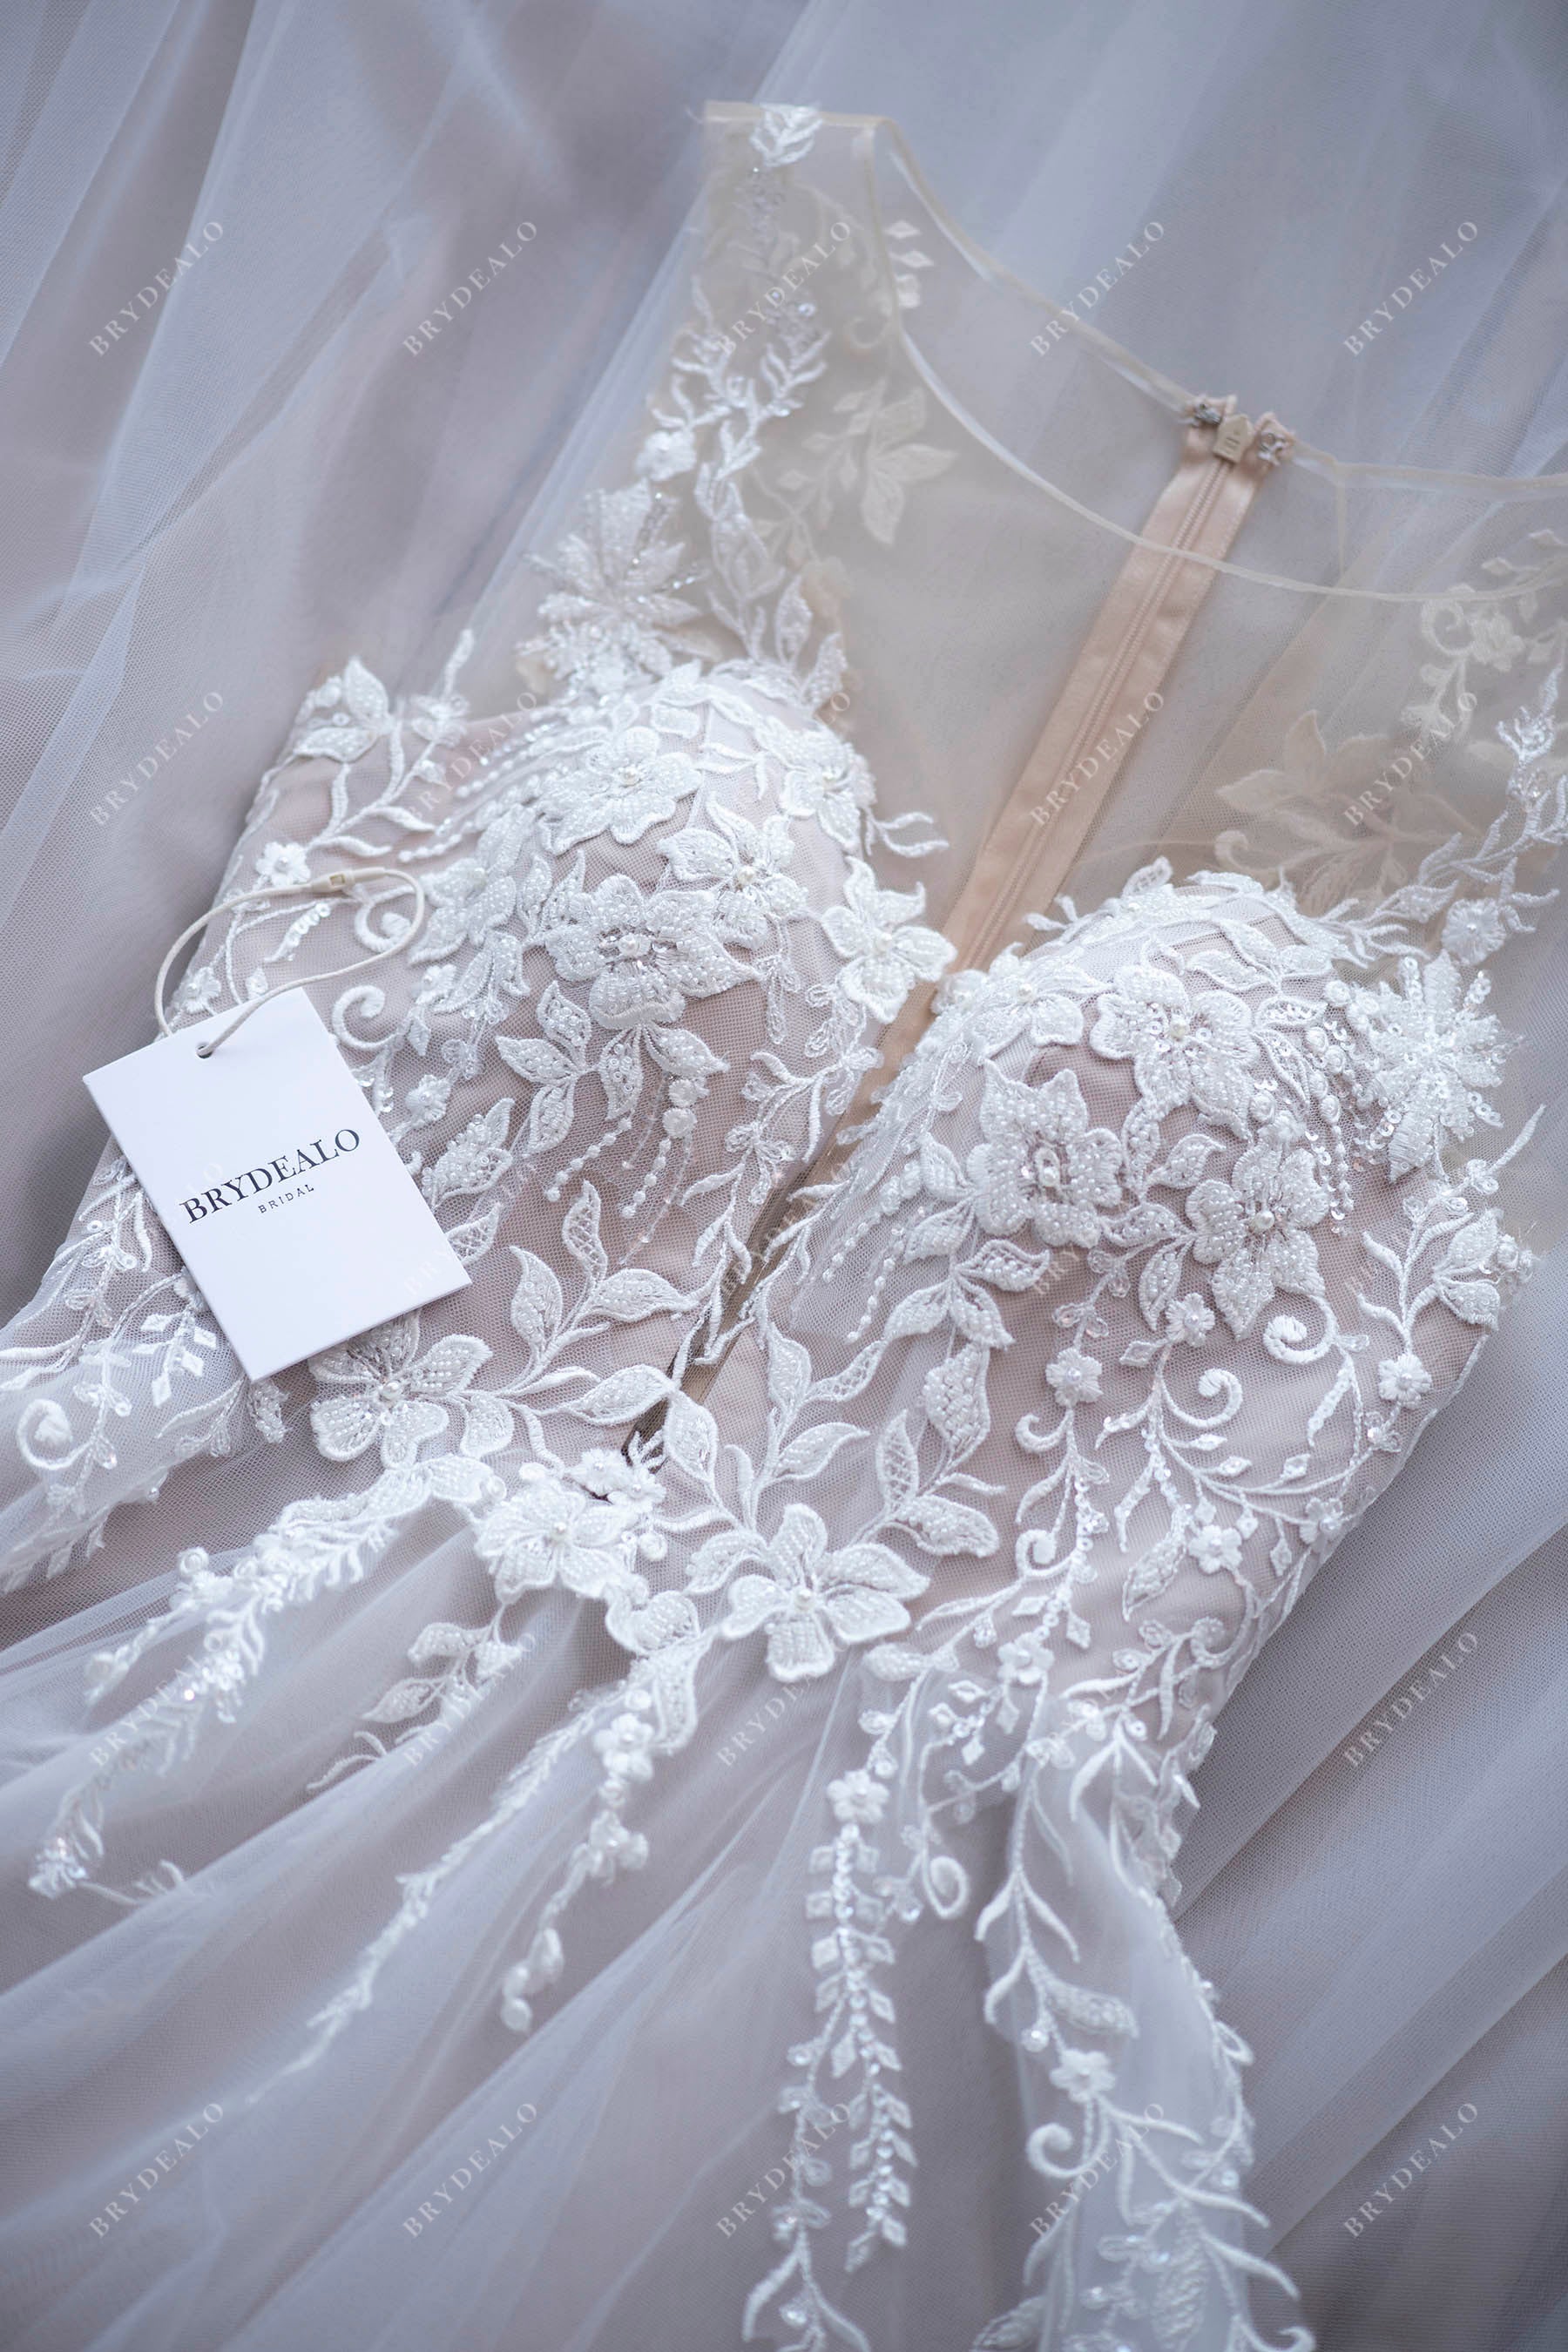 Sample Sale | Romantic Beaded Lace Illusion A-line Bridal Dress